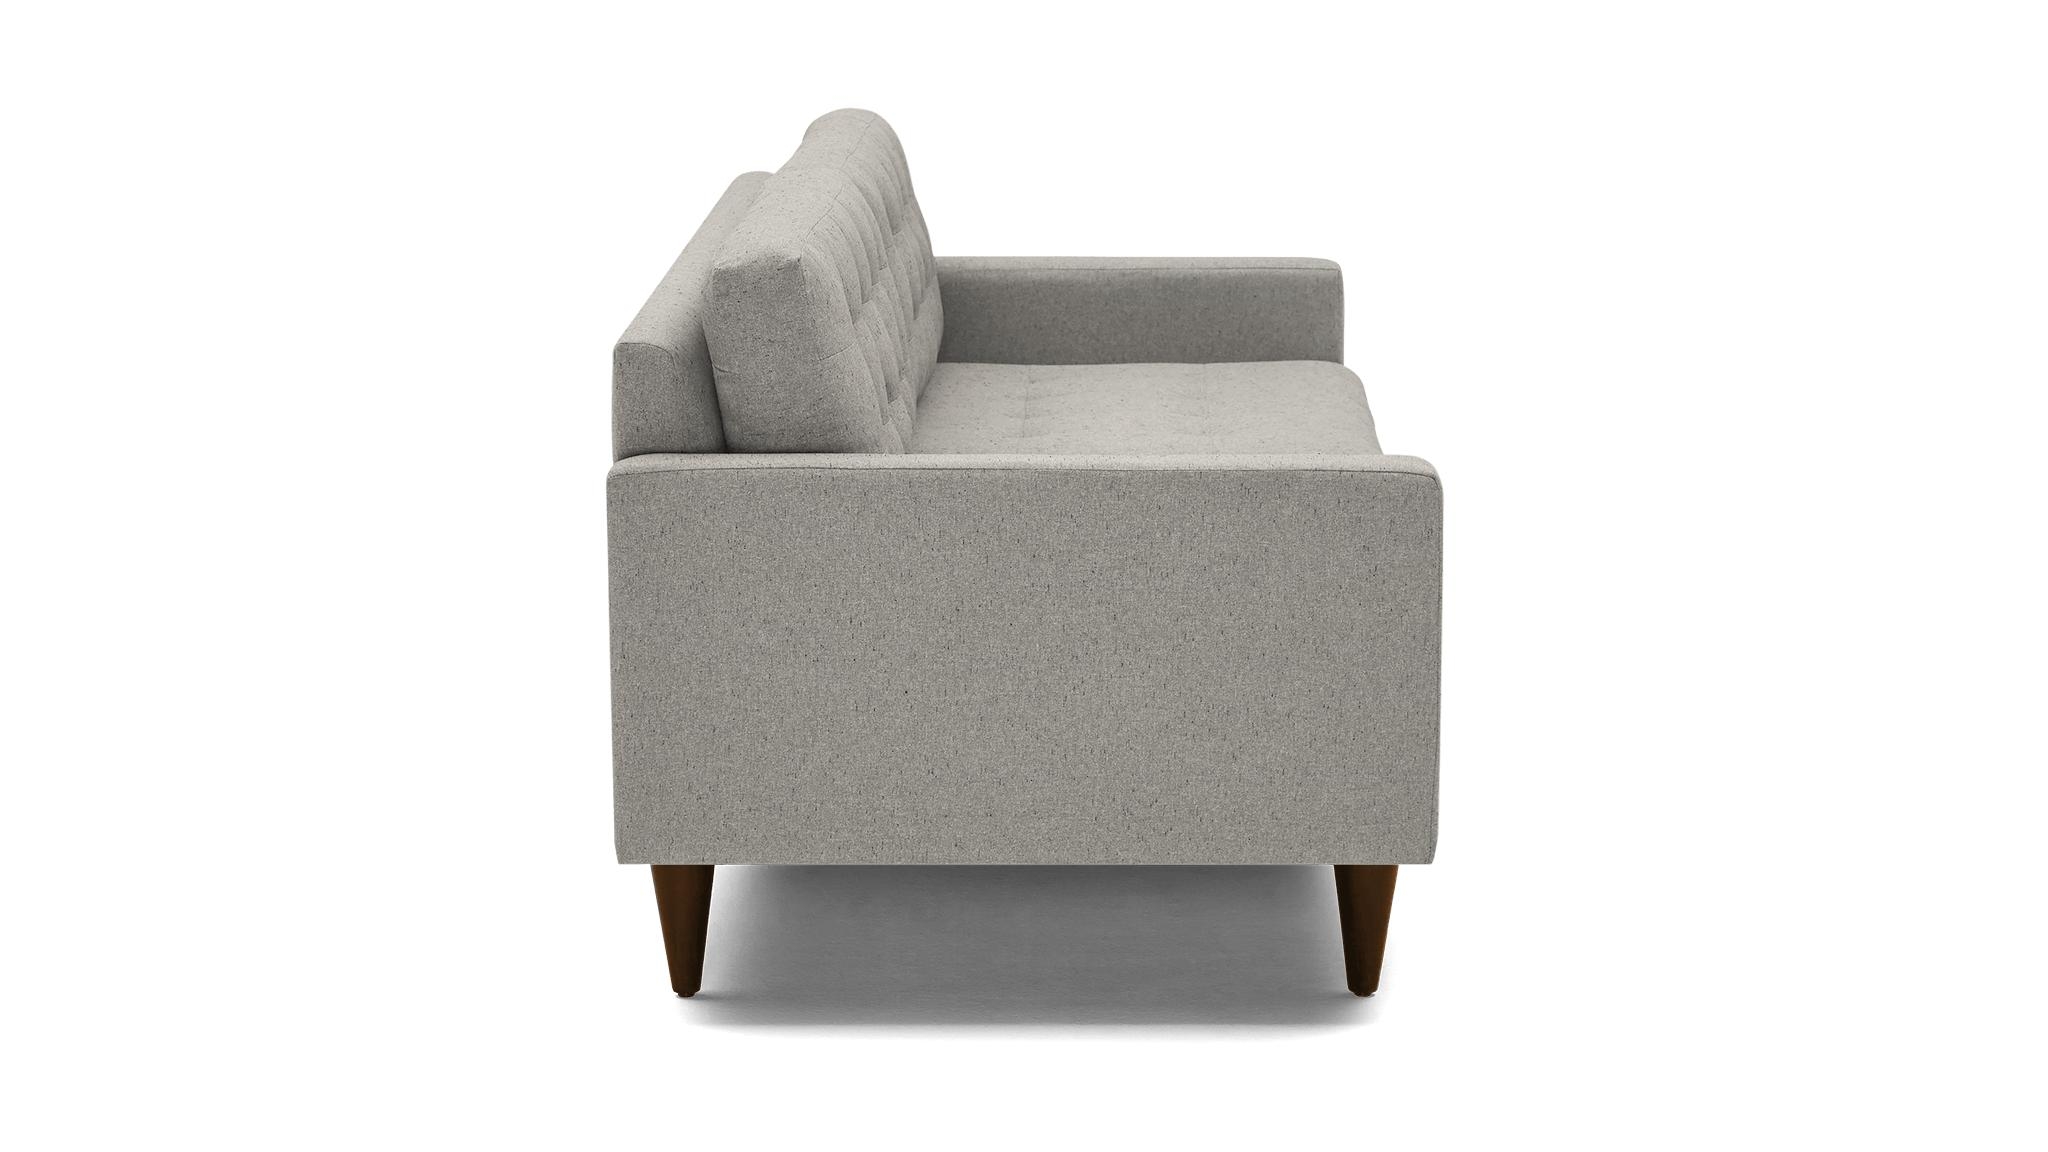 White Eliot Mid Century Modern Sofa - Bloke Cotton - Mocha - Image 2